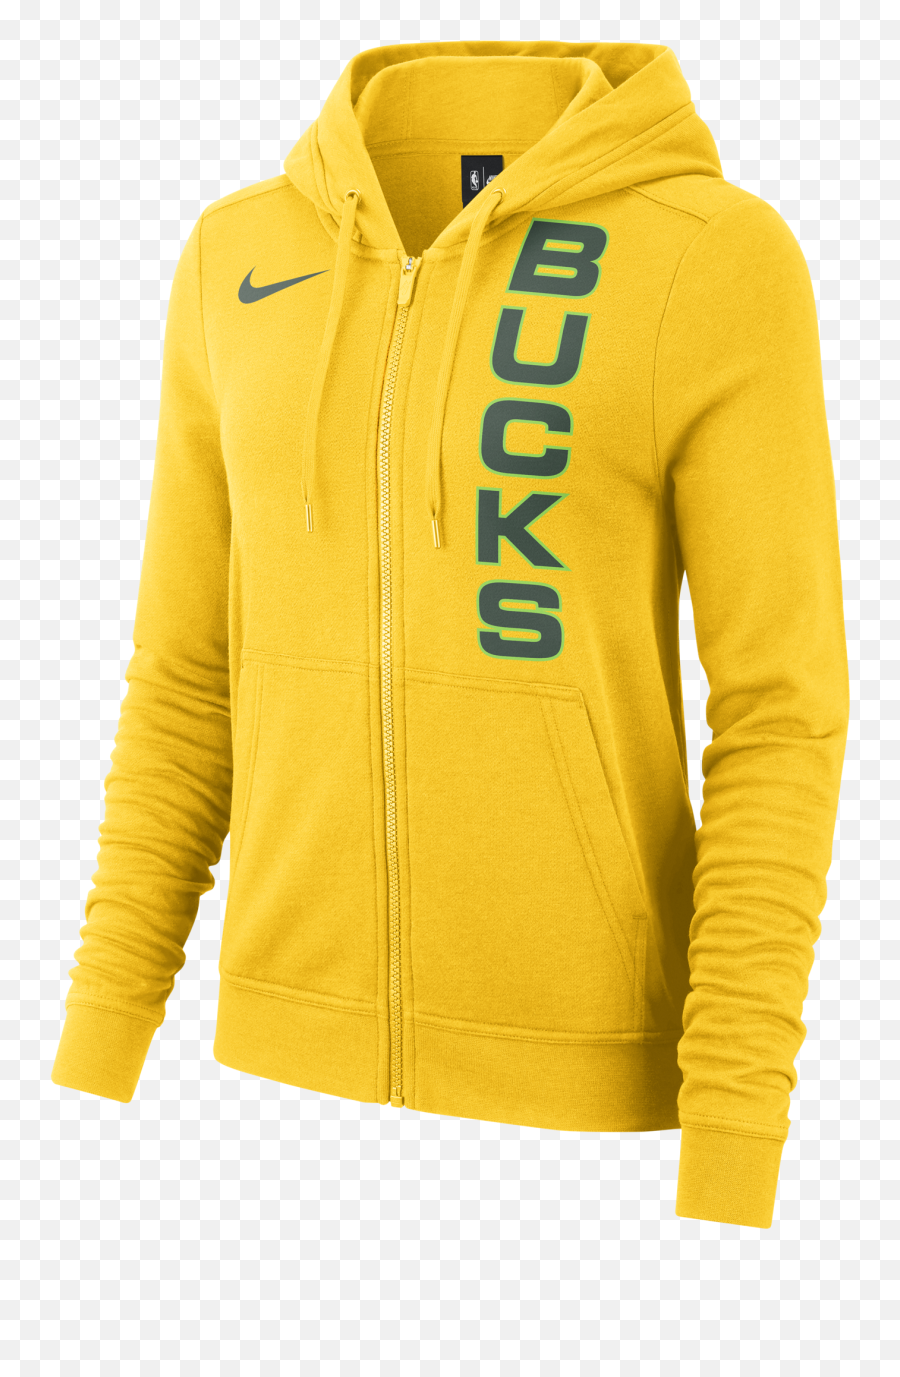 Nike Yellow Hoodie Cheaper Than Retail Priceu003e Buy Clothing - Hoodie Png,Nike Sb Icon Full Zip Hoodie